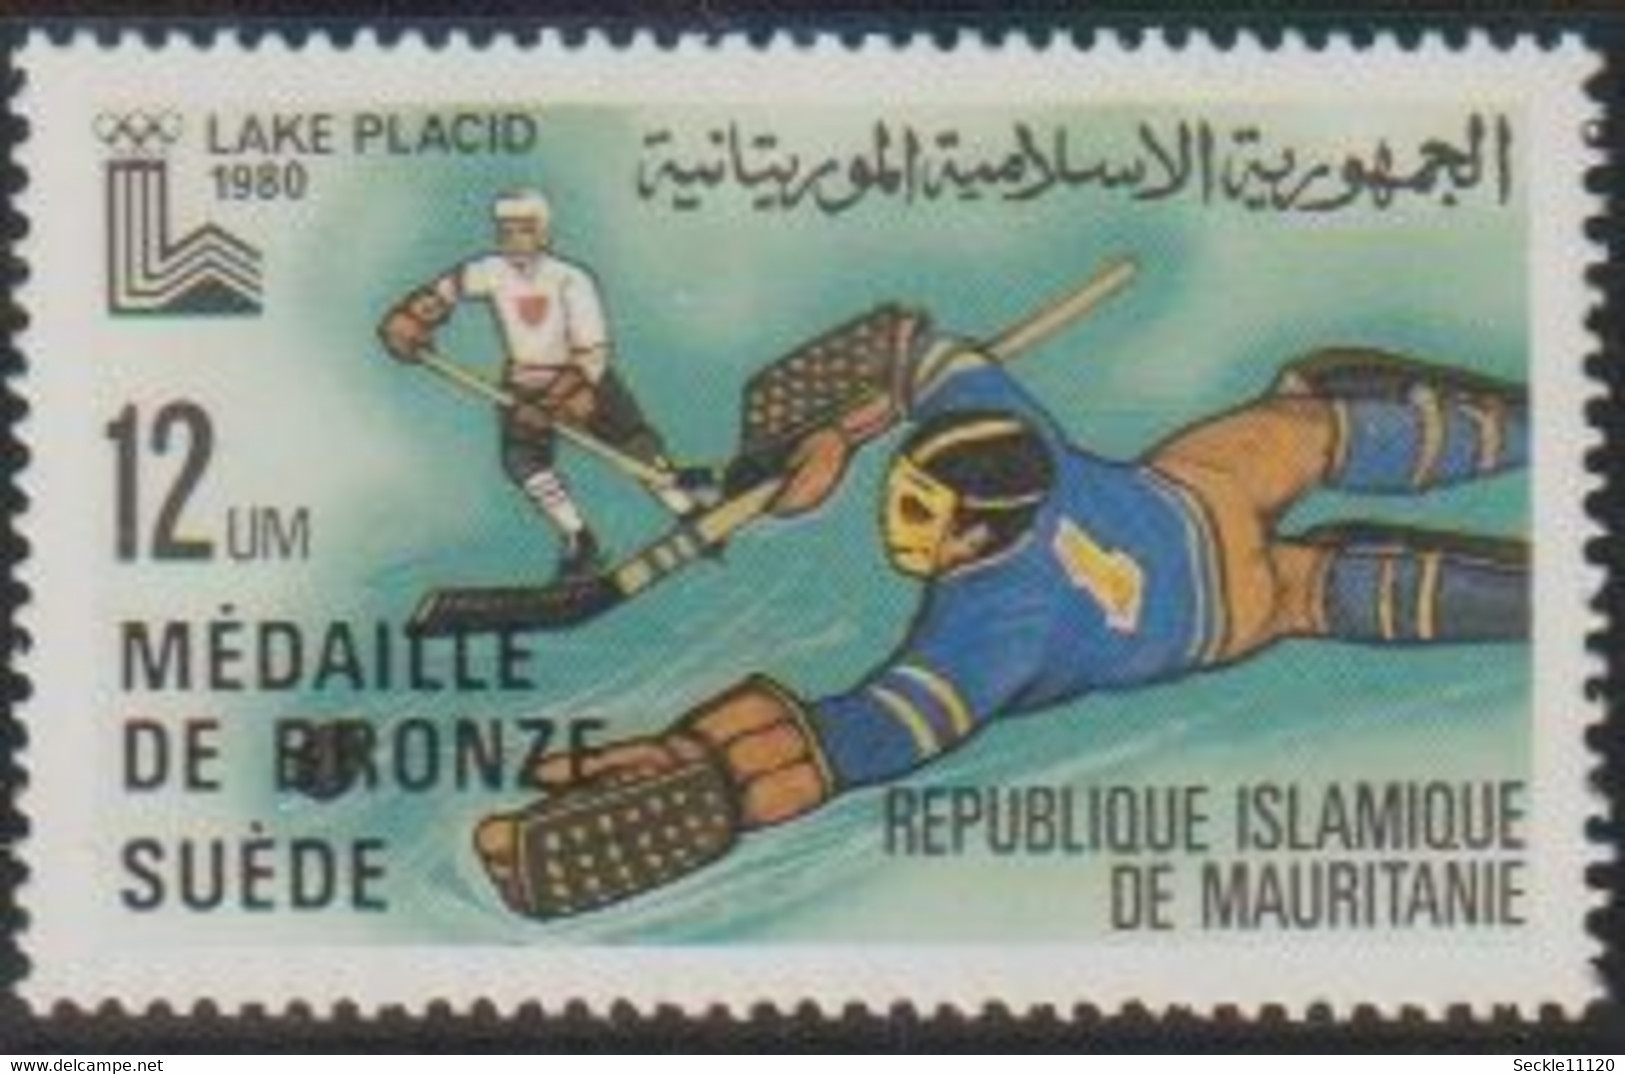 Mauritanie Mauritania - 1979 - 439 / 444 - JO De Lacke Placid - Oblitéré - Mauritanie (1960-...)